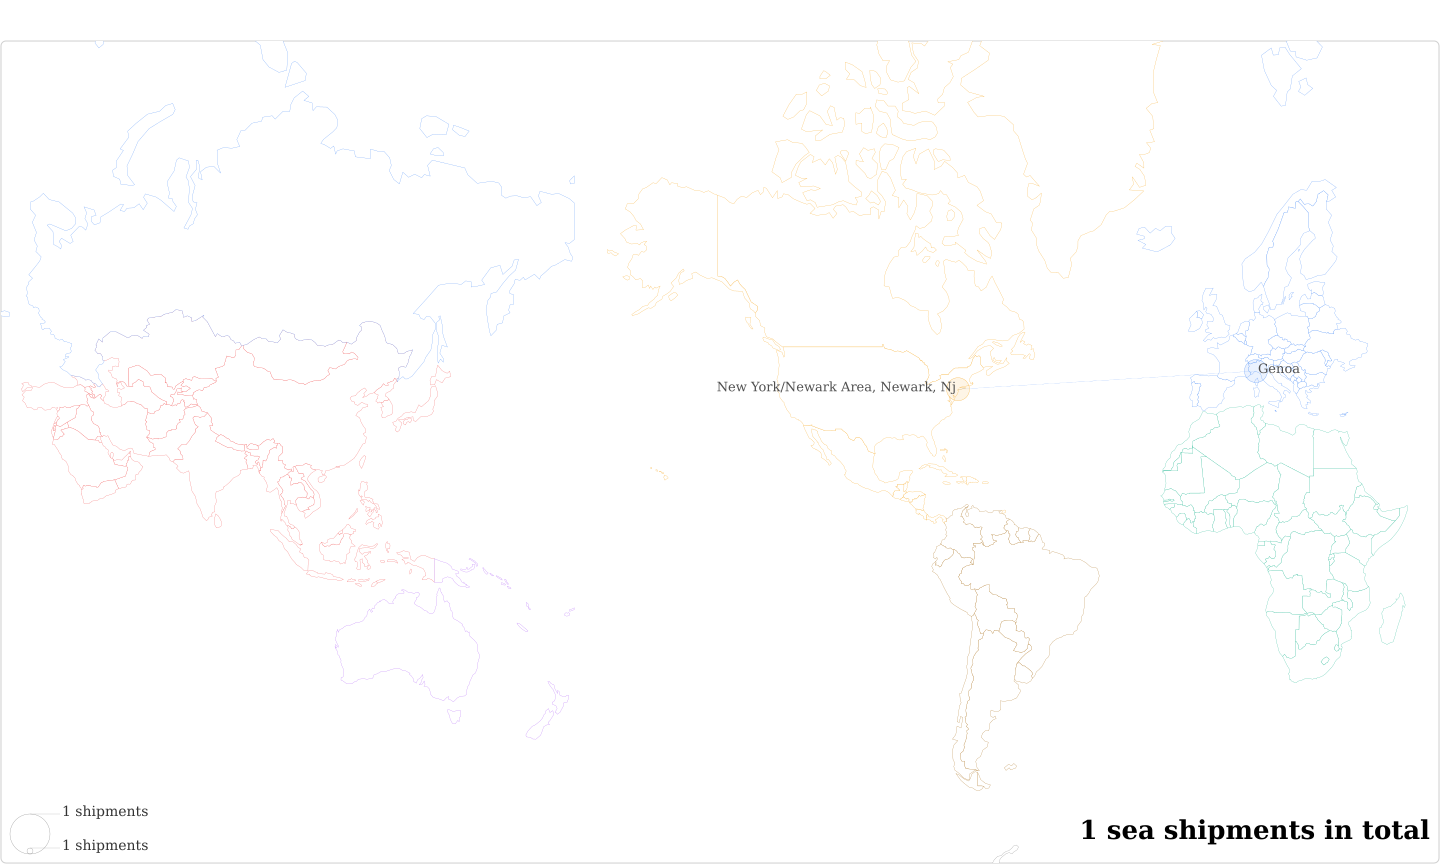 Caffe L Affare's Imports Per Country Map